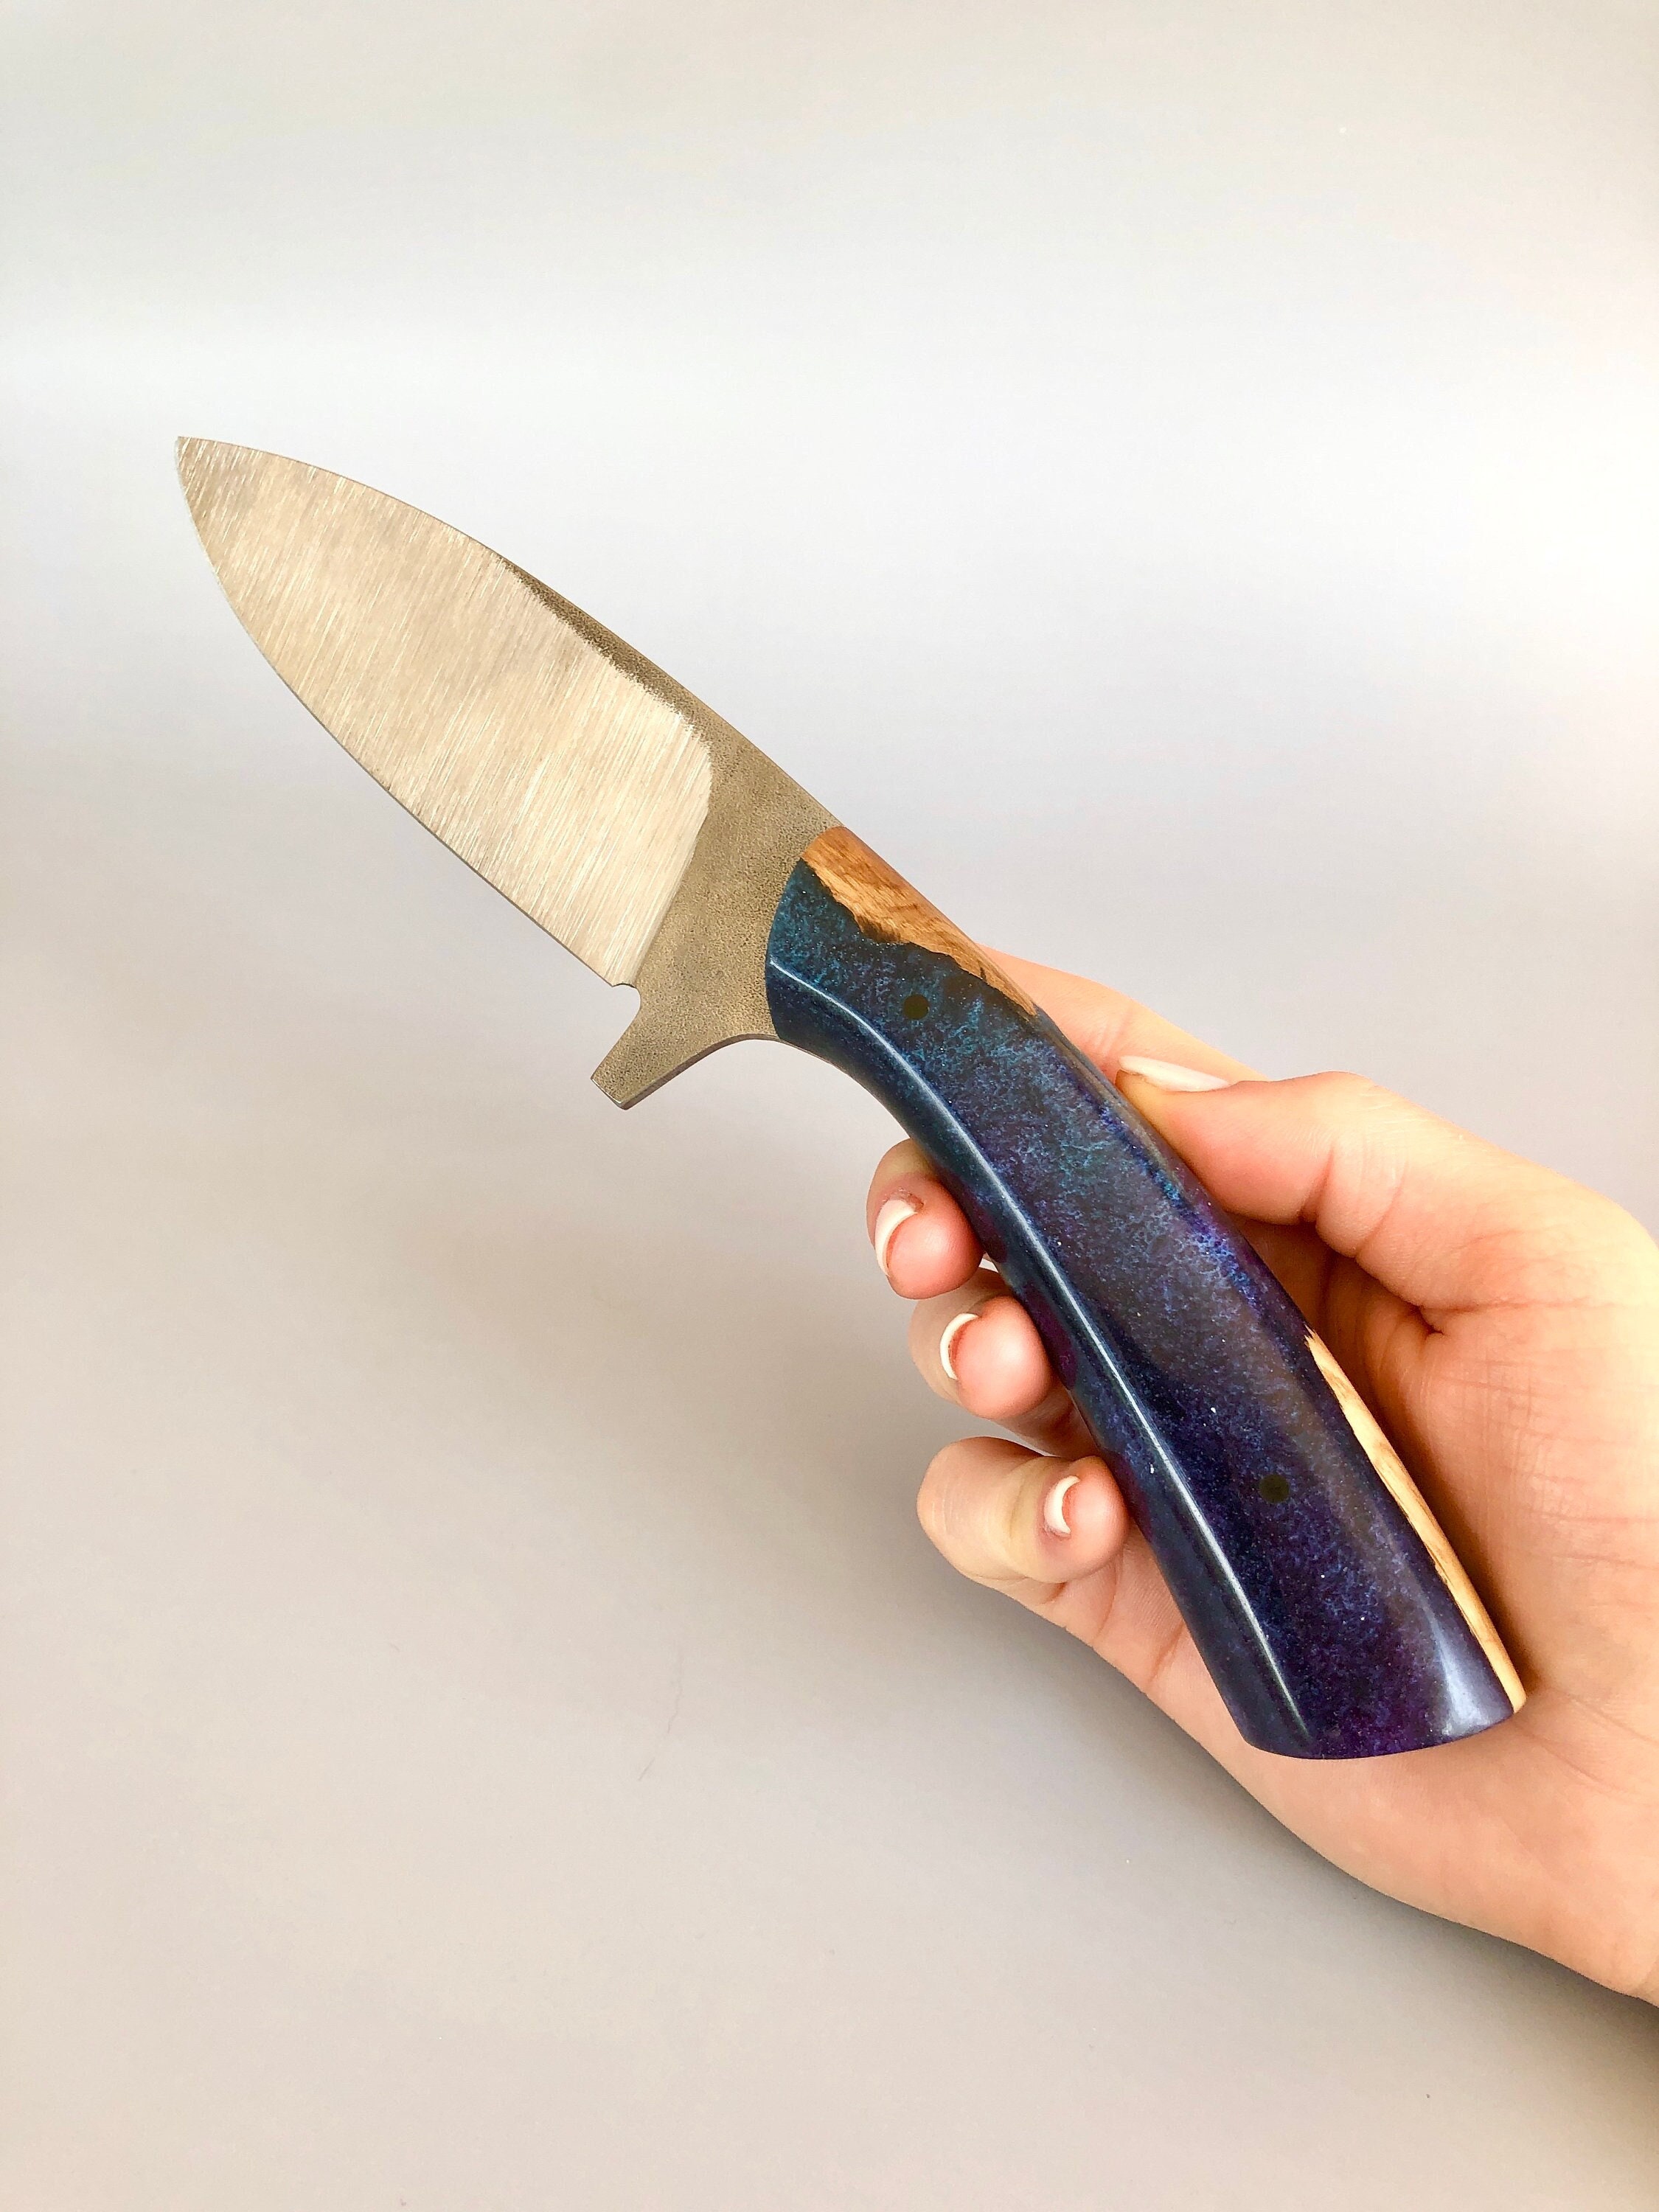 Segmented Knife Handle Scales Zebra Wood / Resin Knife Making Material 